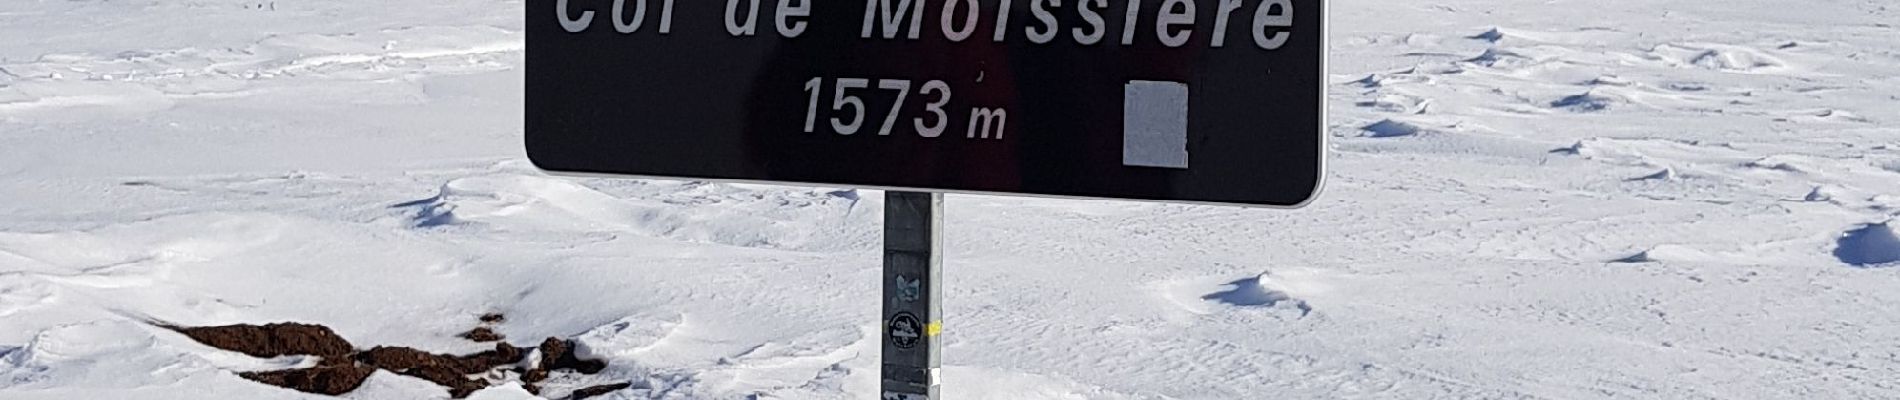 Tocht Sneeuwschoenen Ancelle - Col de Moissiere depart Ancelle  380 + - Photo